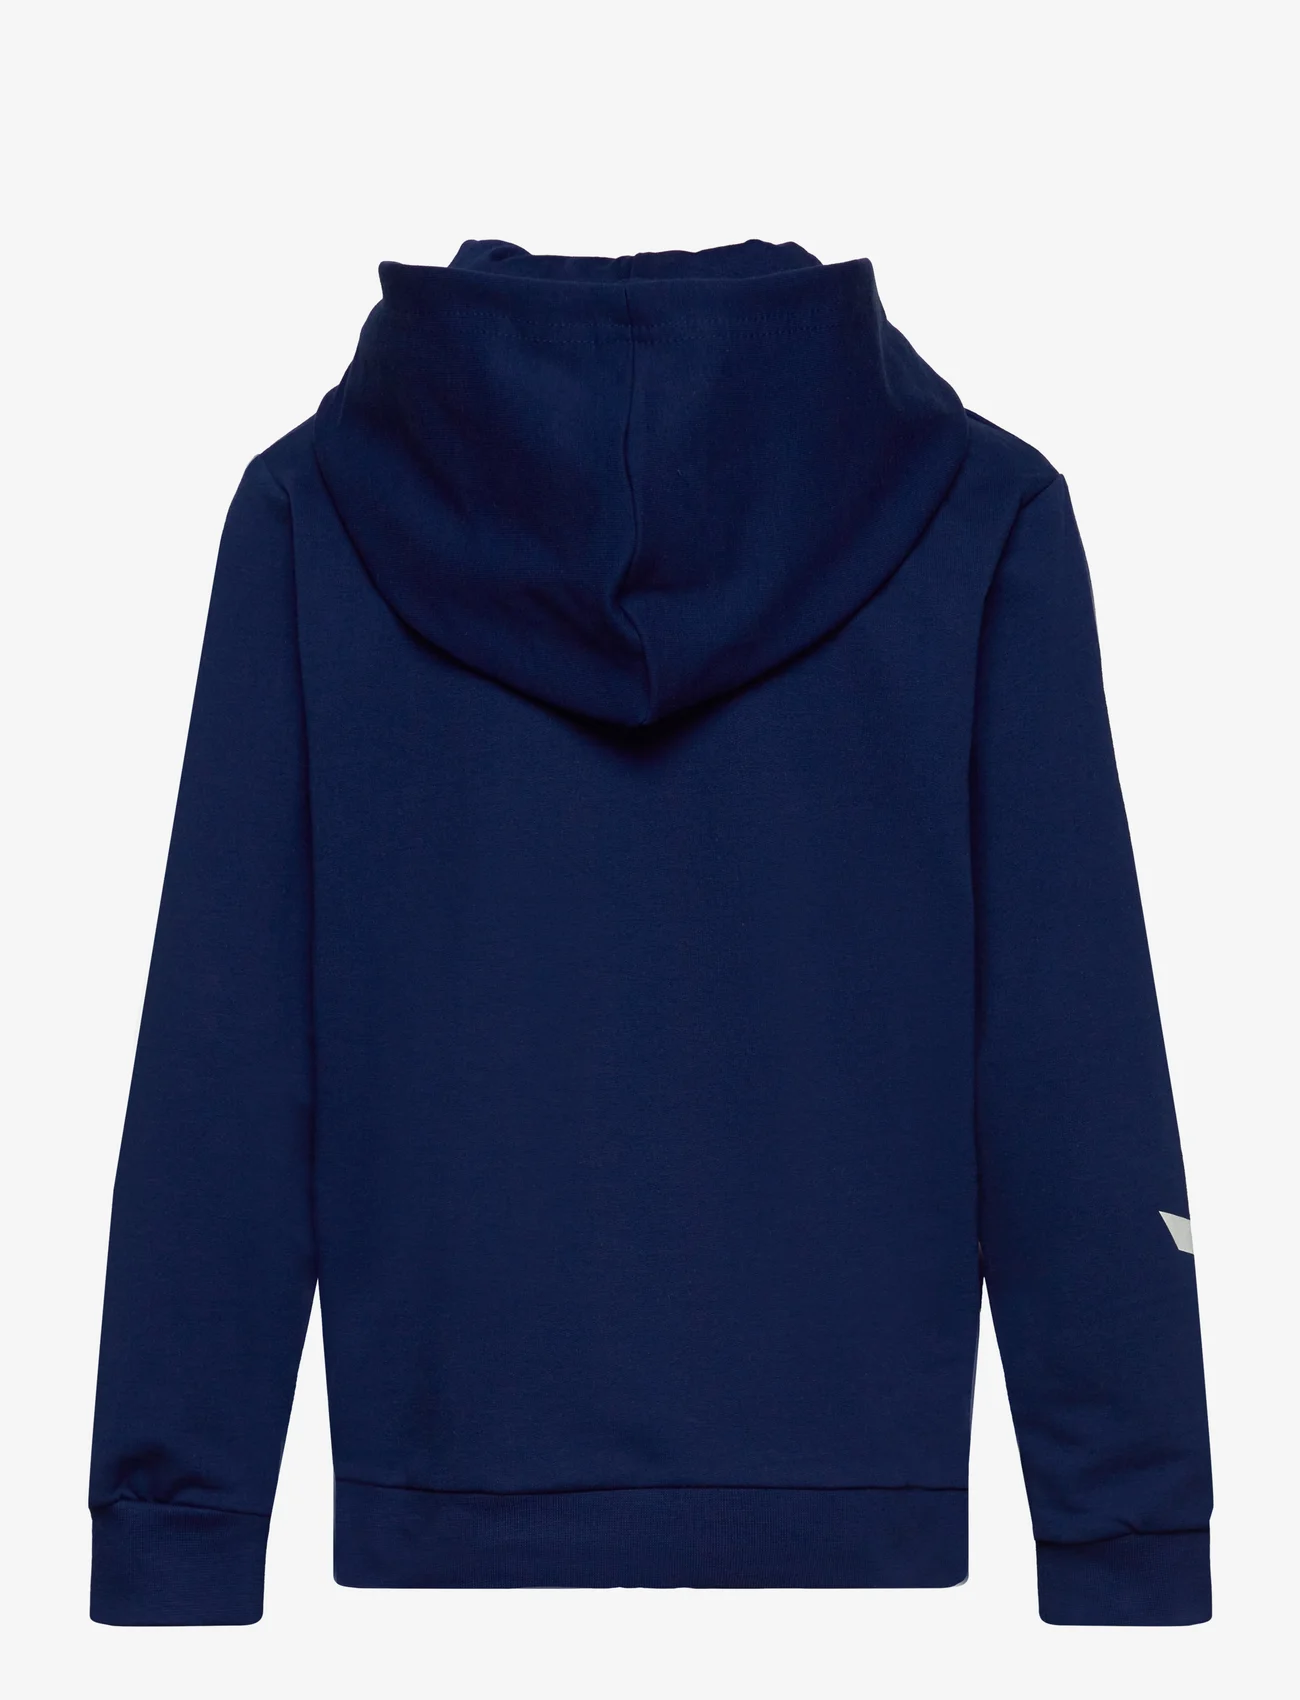 Hummel - hmlTRECE ZIP HOODIE - sweatshirts & hættetrøjer - estate blue - 1